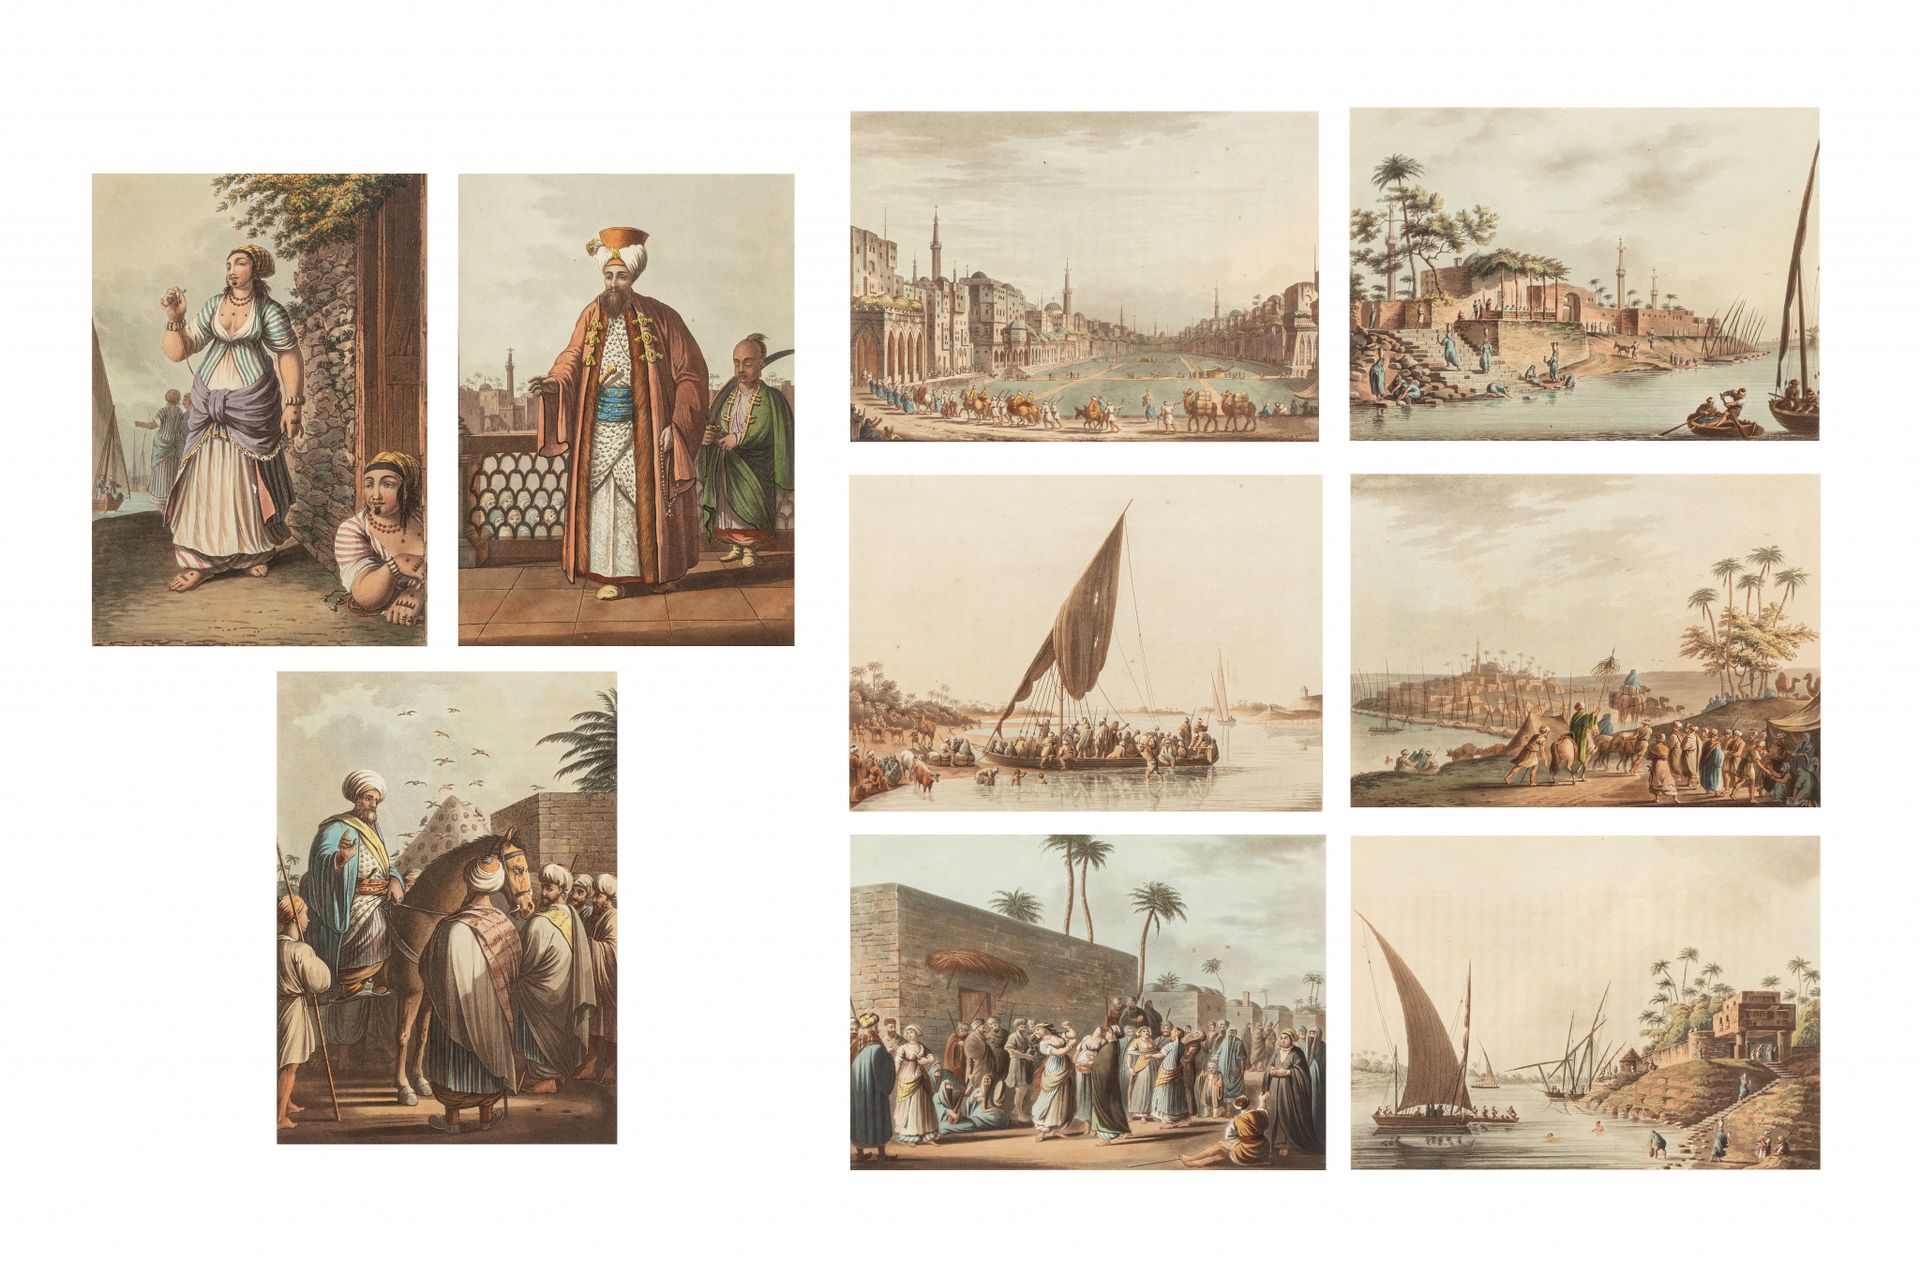 Neuf gravures sur l'Egypte Londres, 1802, editado por Robert Bowyer (1758-1834)
&hellip;